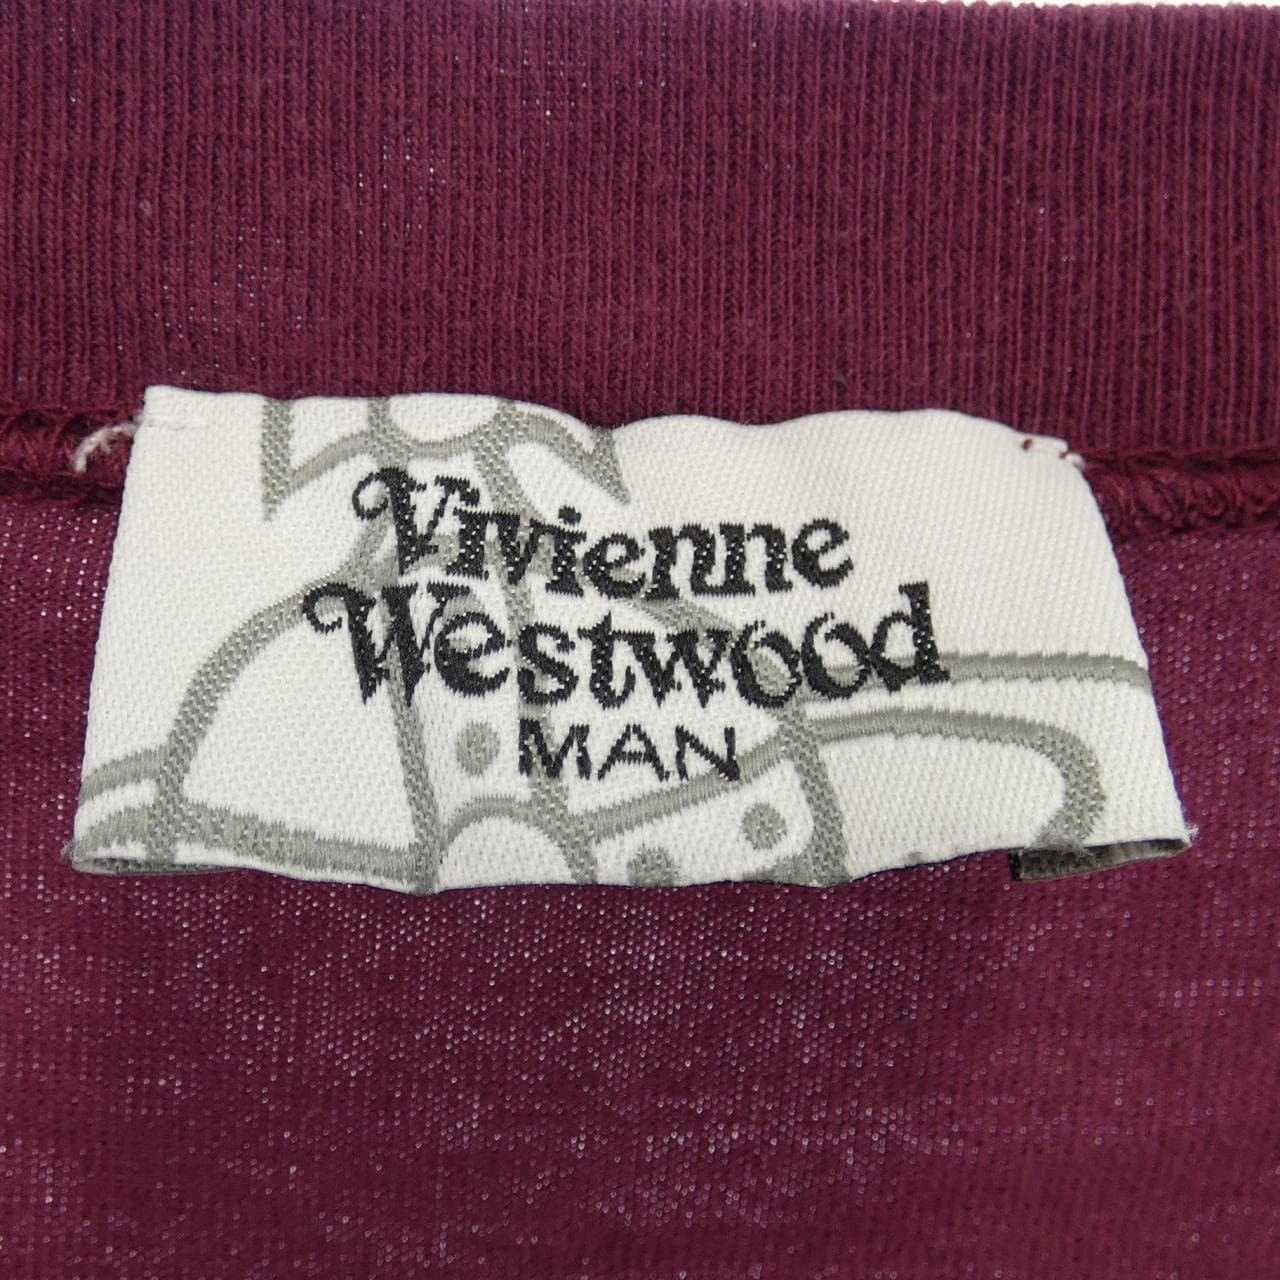 Vivienne Vivienne WestwoodMAN T-shirt